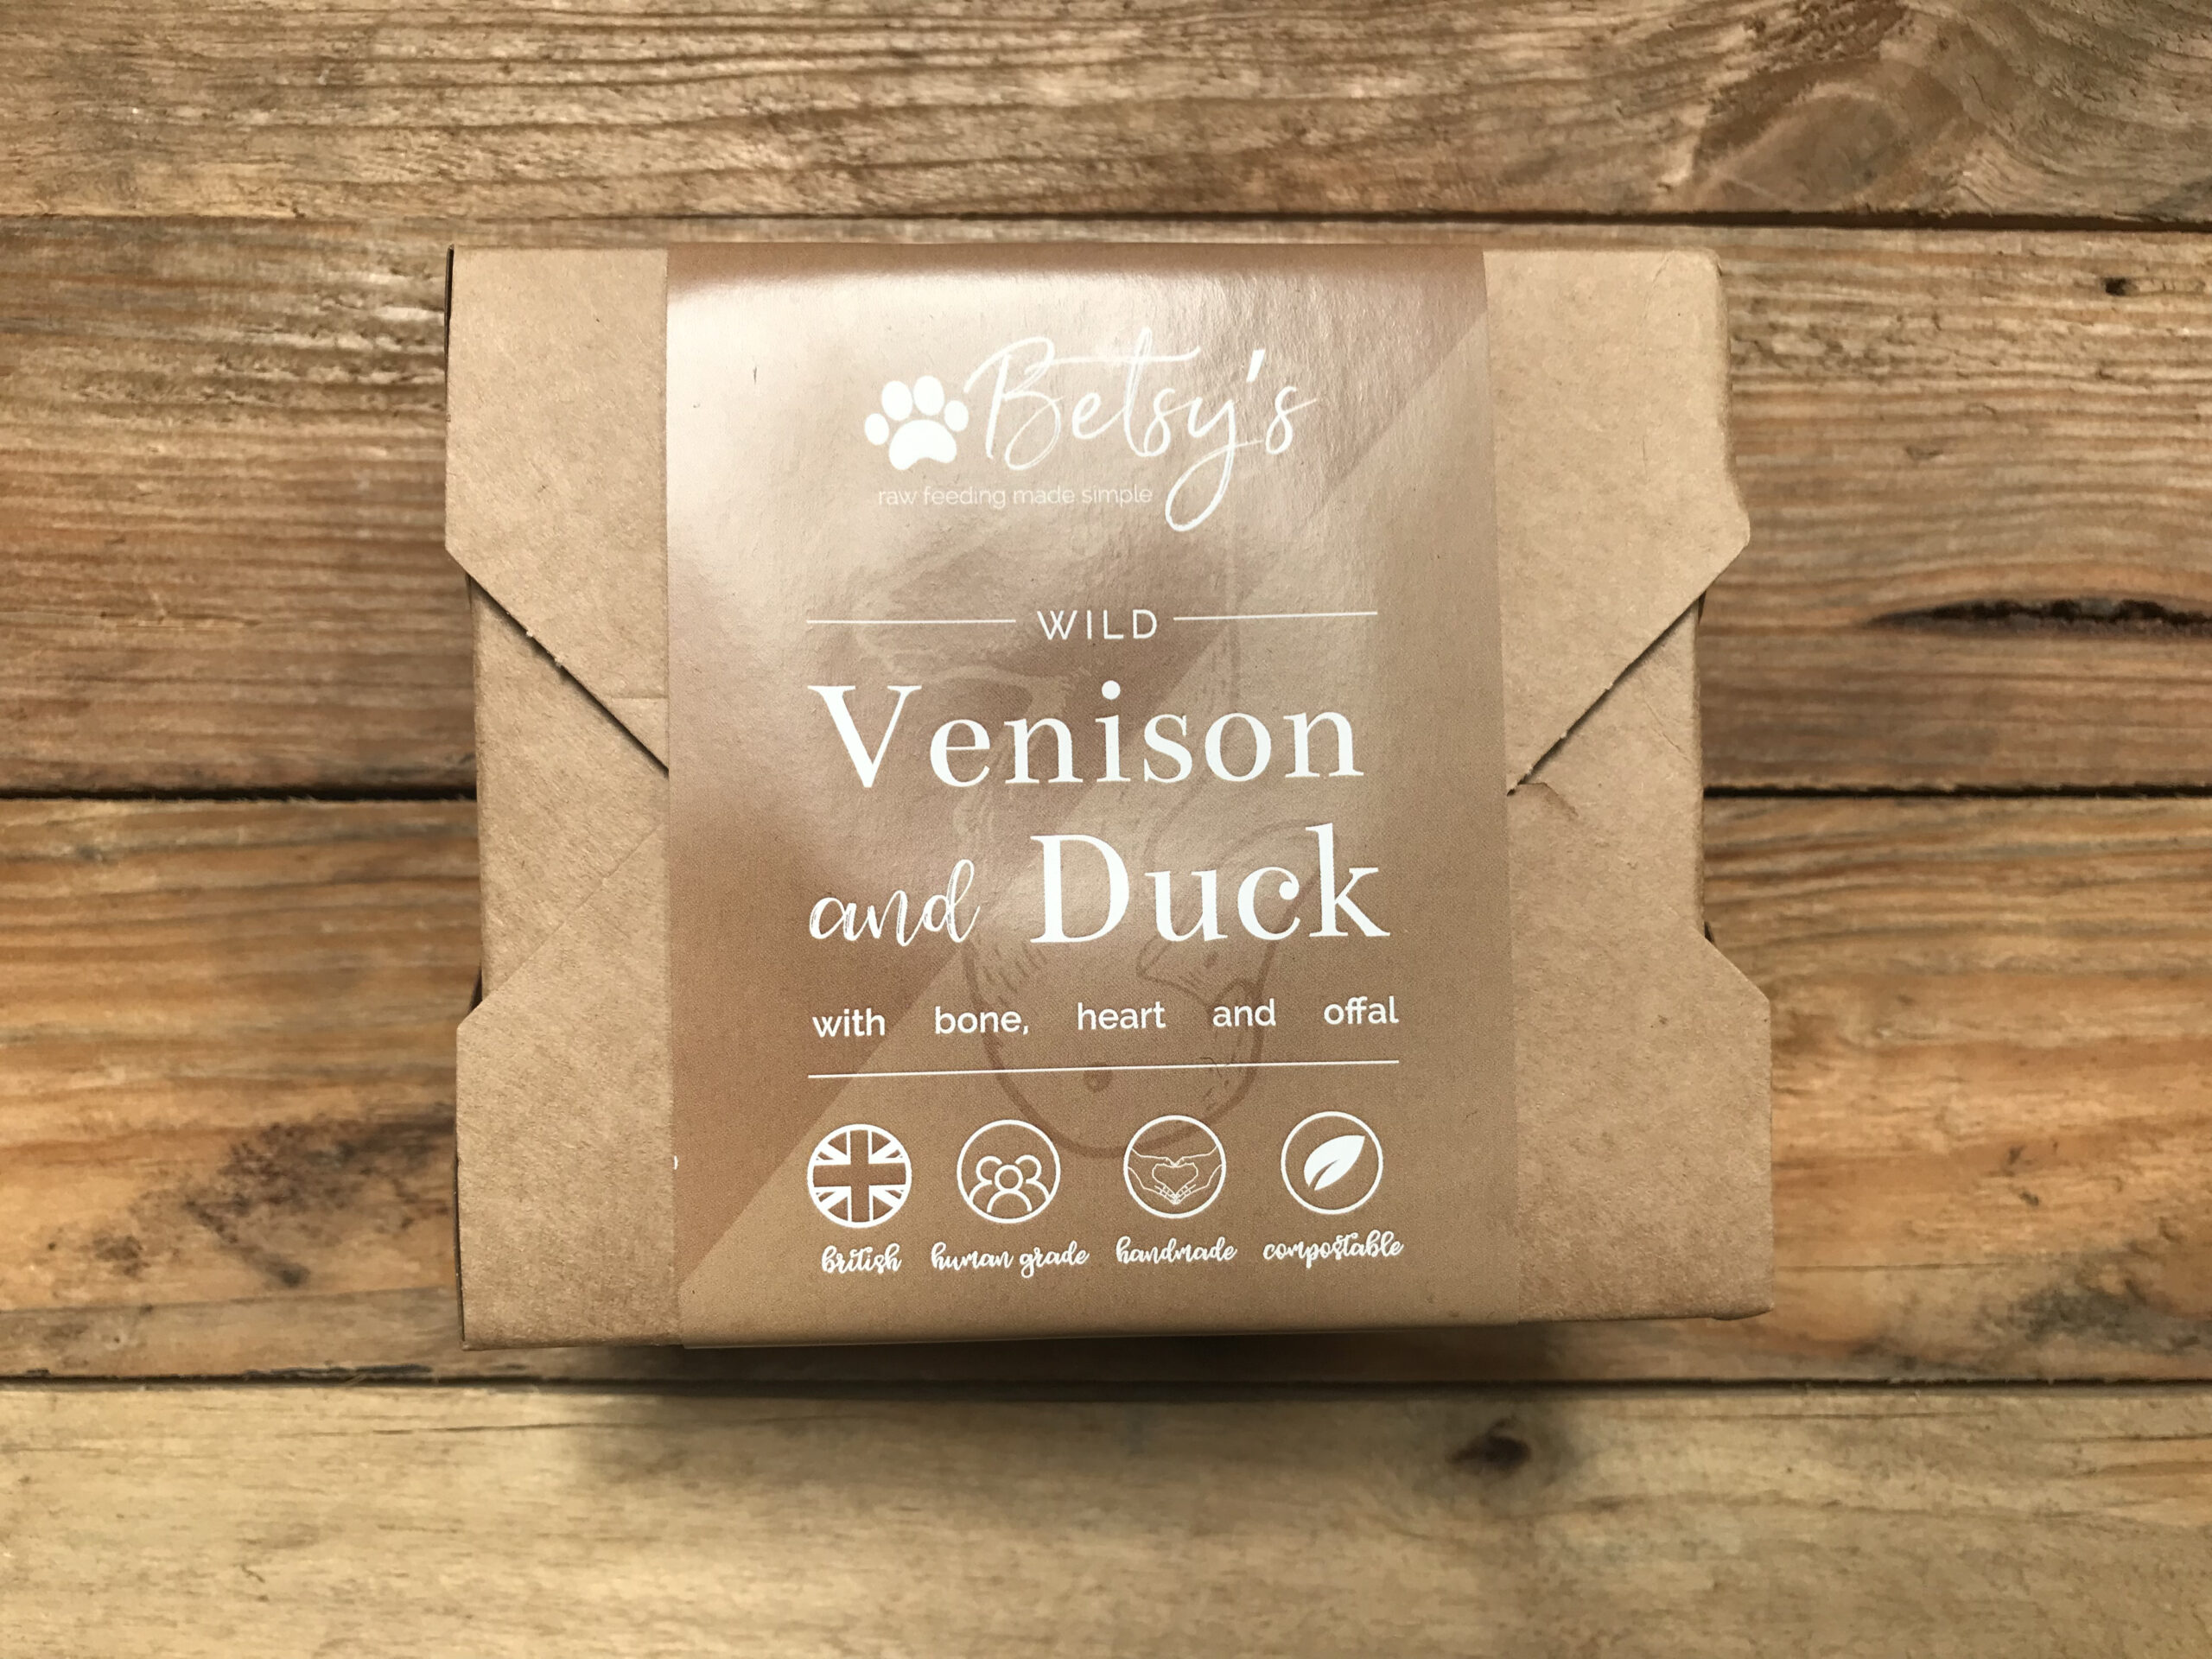 Betsy’s Venison & Duck – 500g